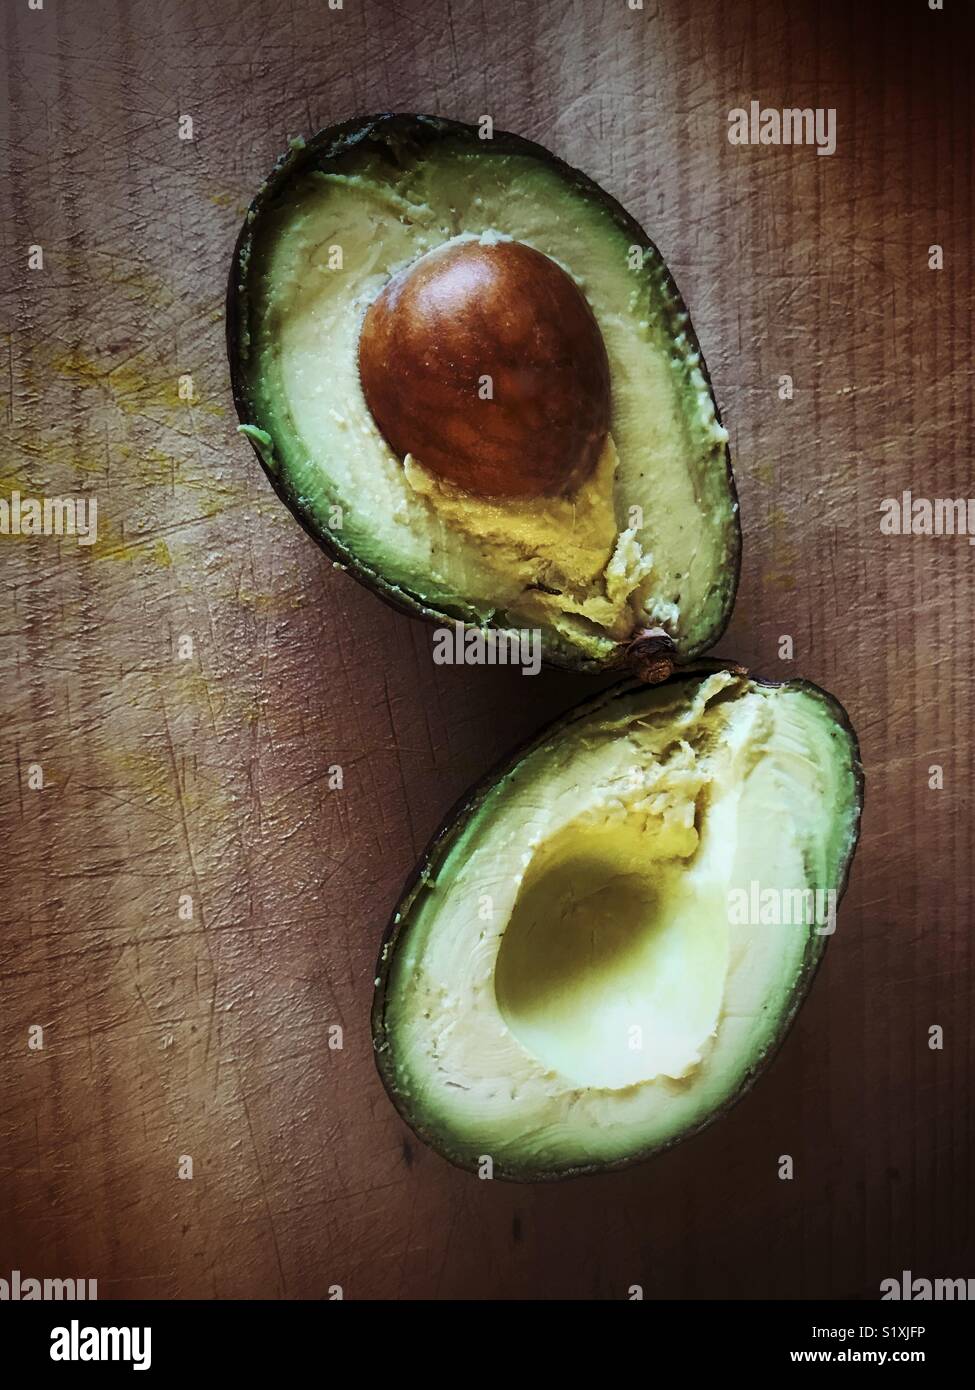 Overhead shot of an avocado cut in half on a cutting board. Stock Photo